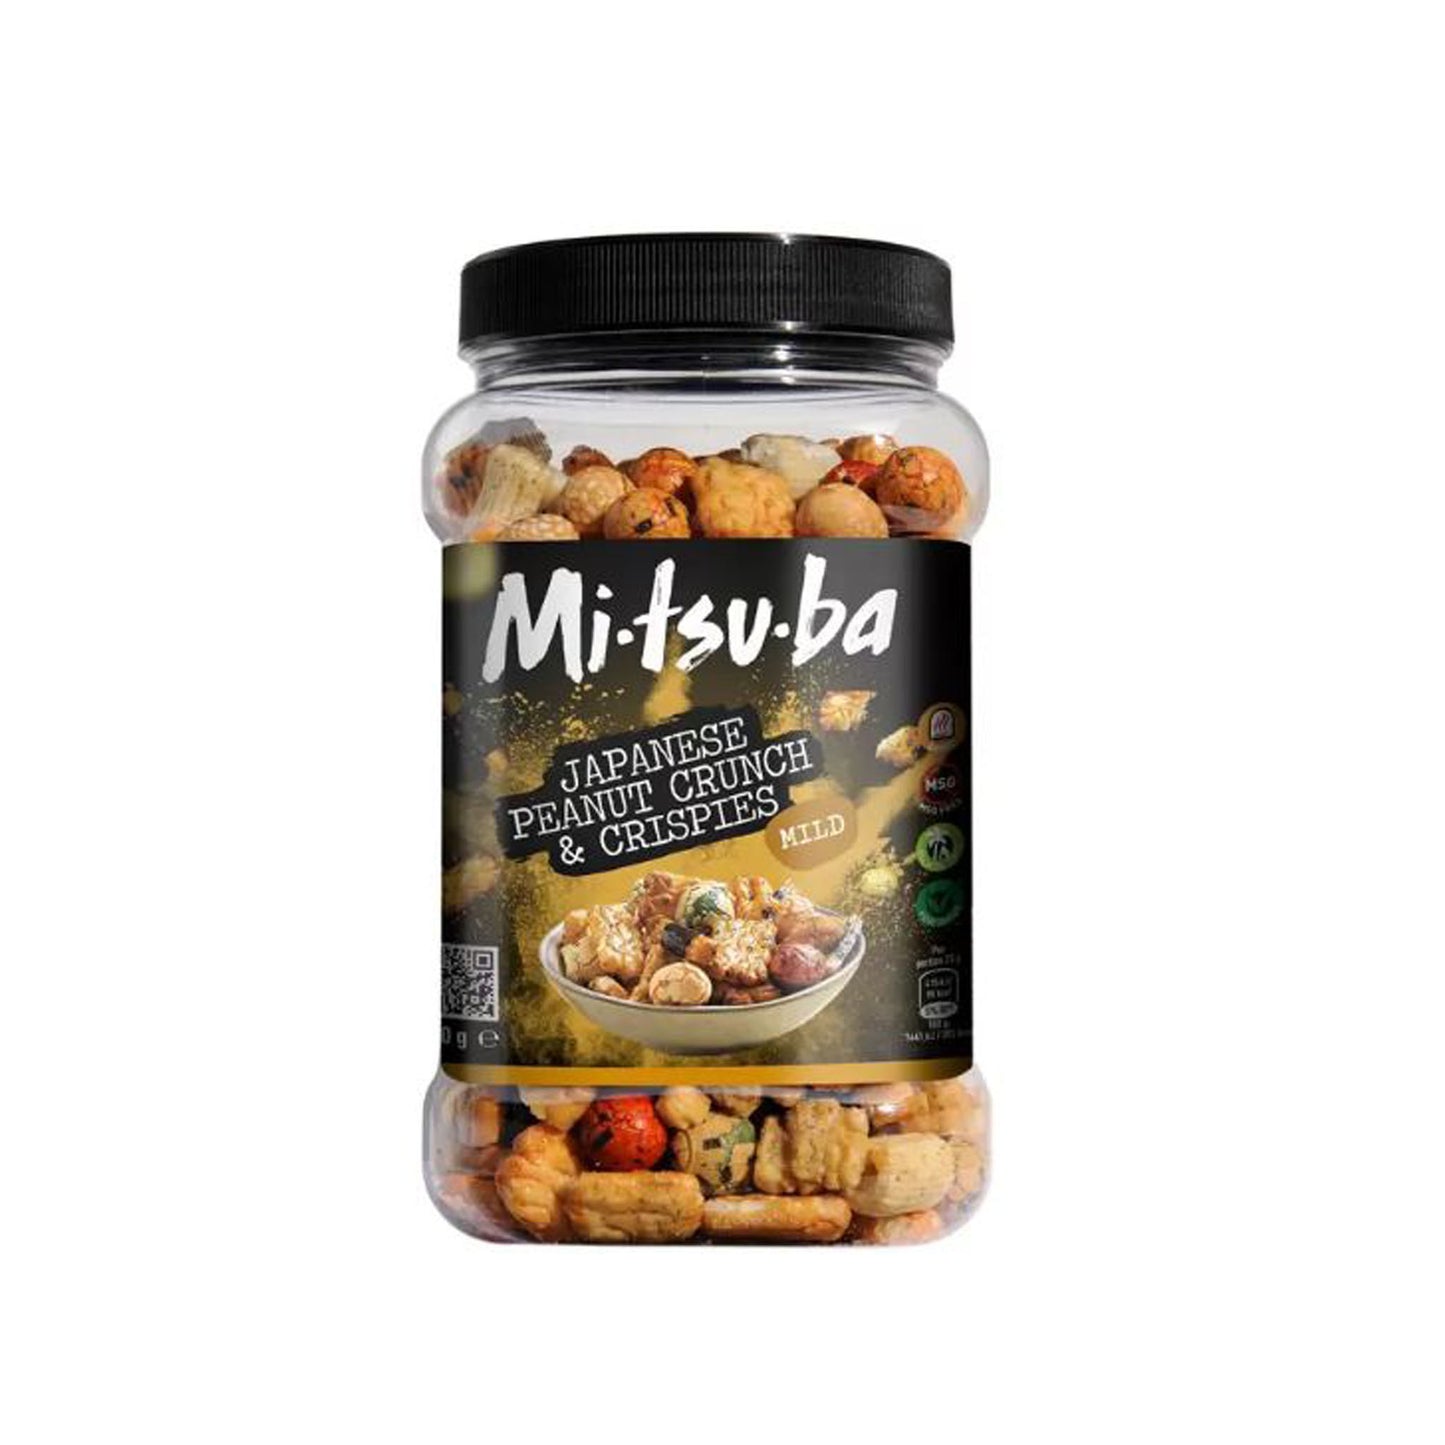 Mitsuba Japanese Peanut Crunch and Crispies, 650g